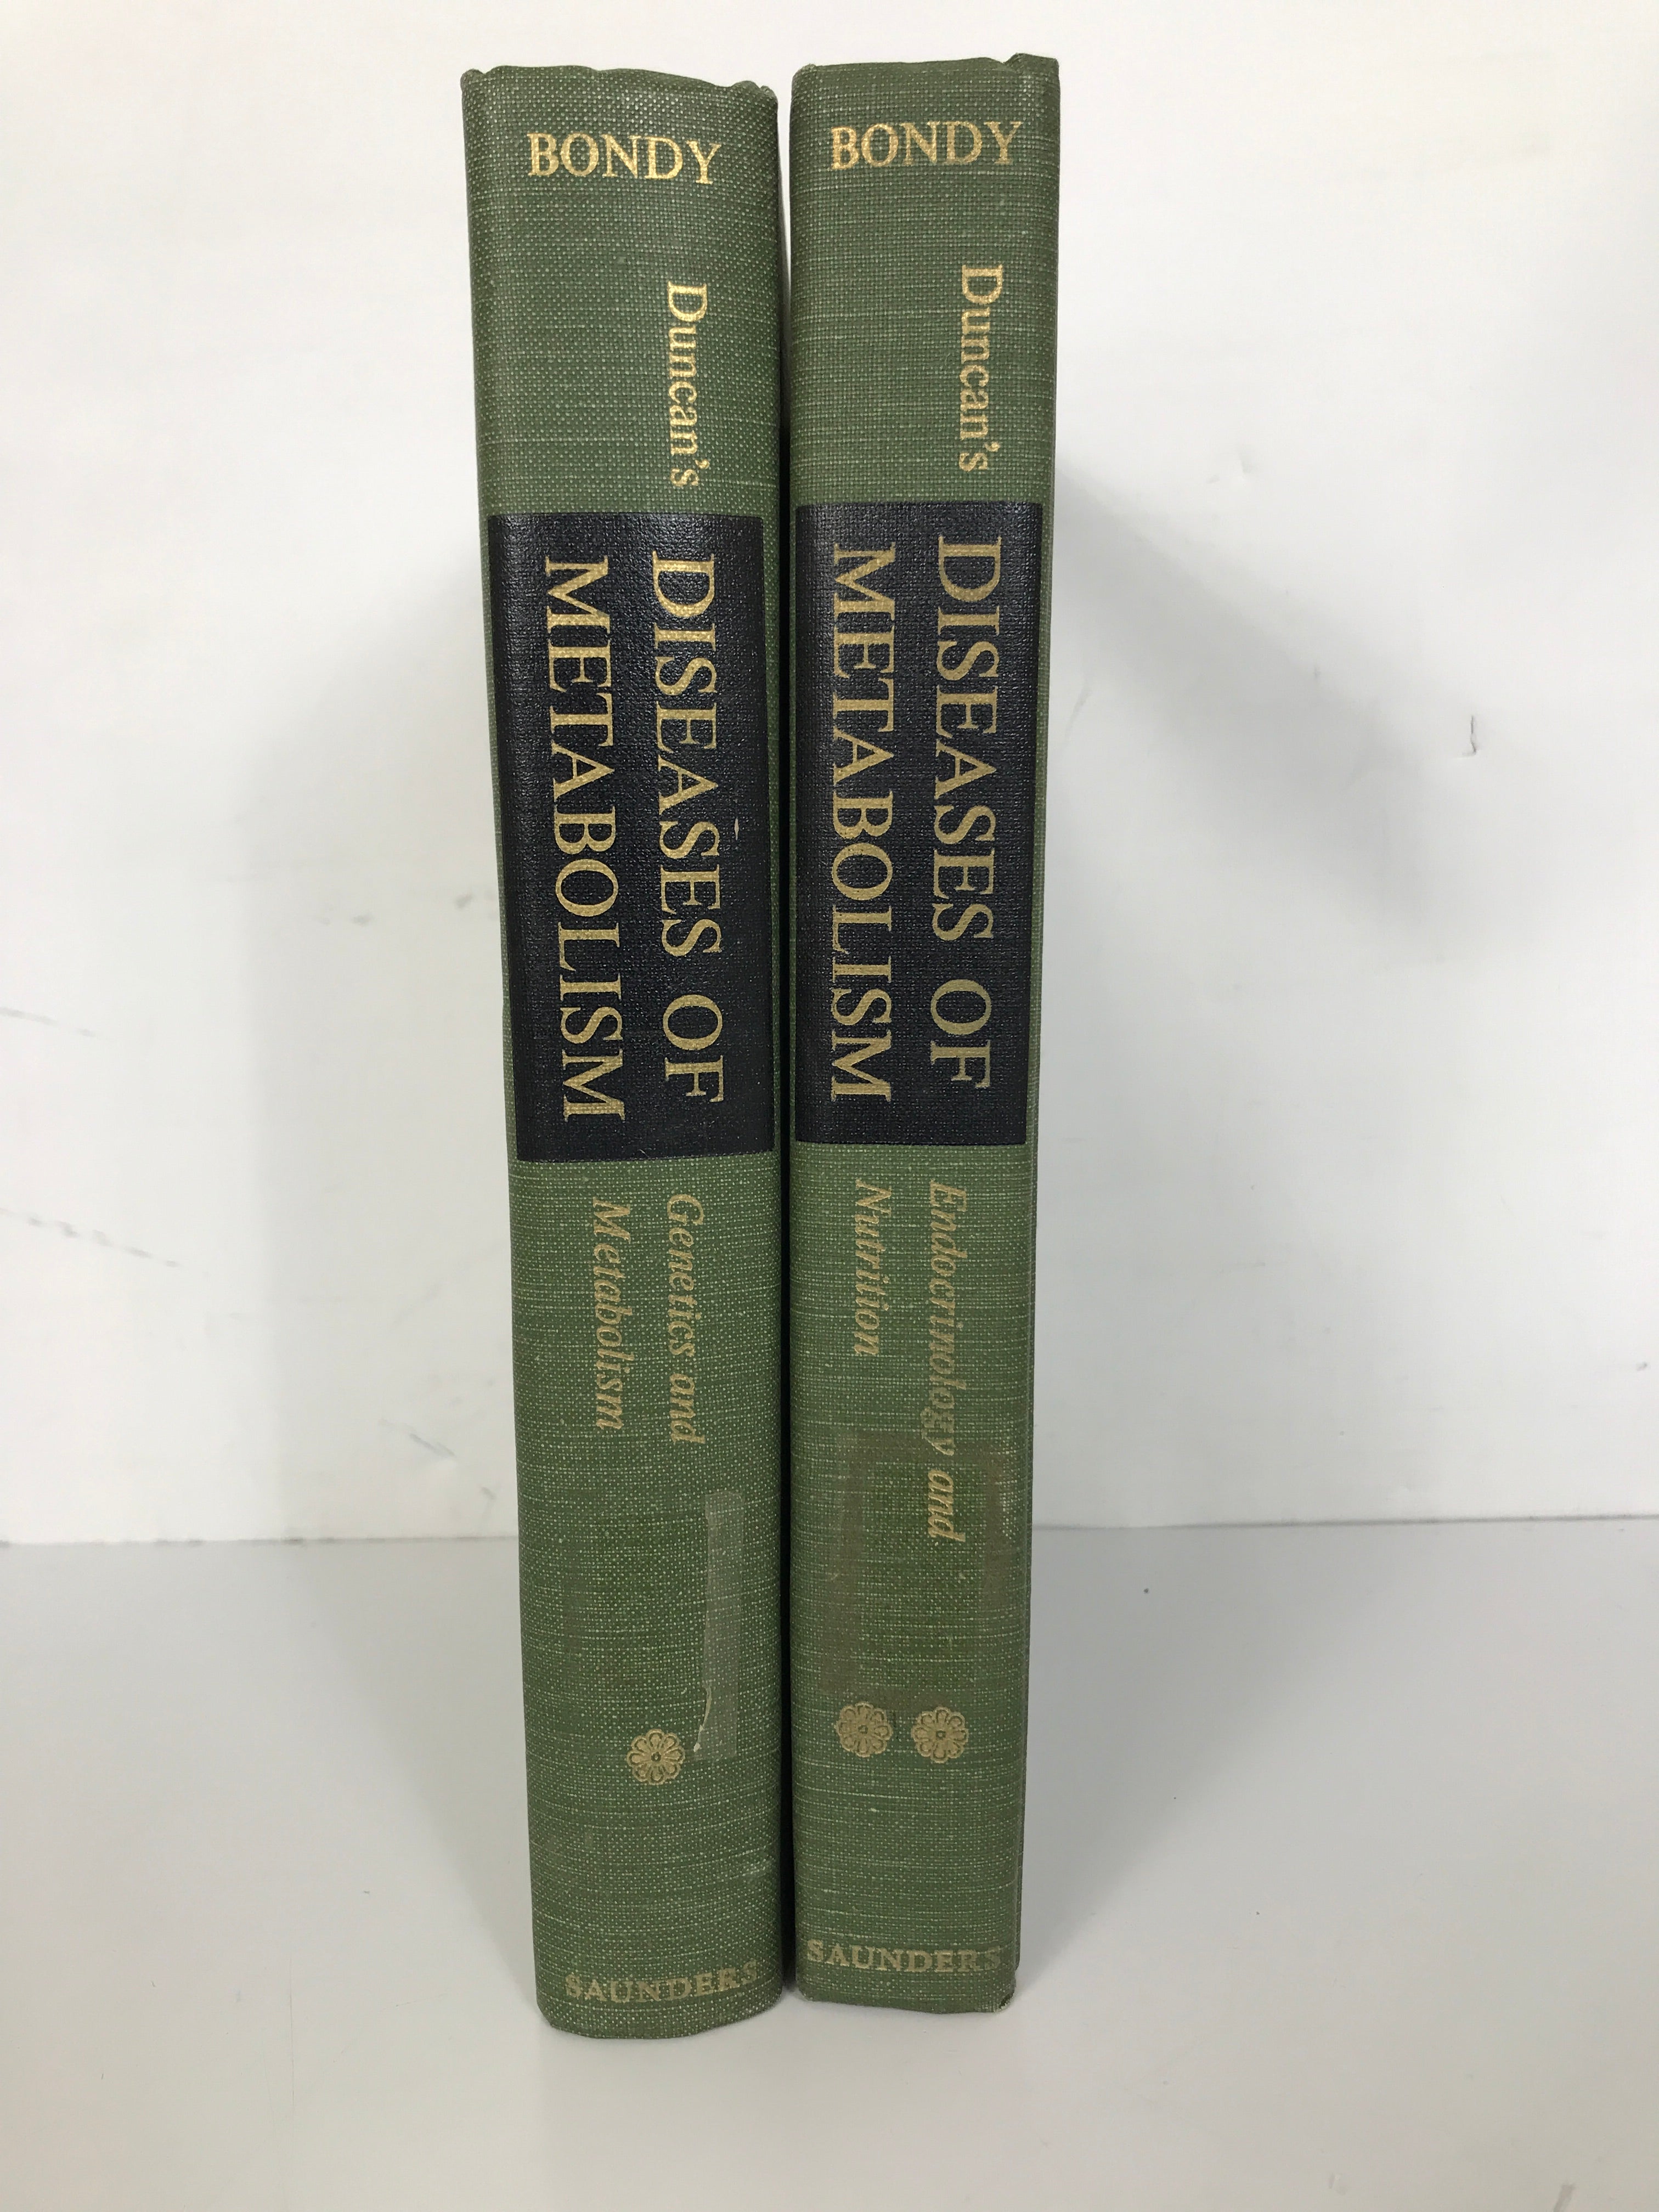 2 Volume Set: Duncan's Diseases of Metabolism Sixth Edition 1969 Vintage HC